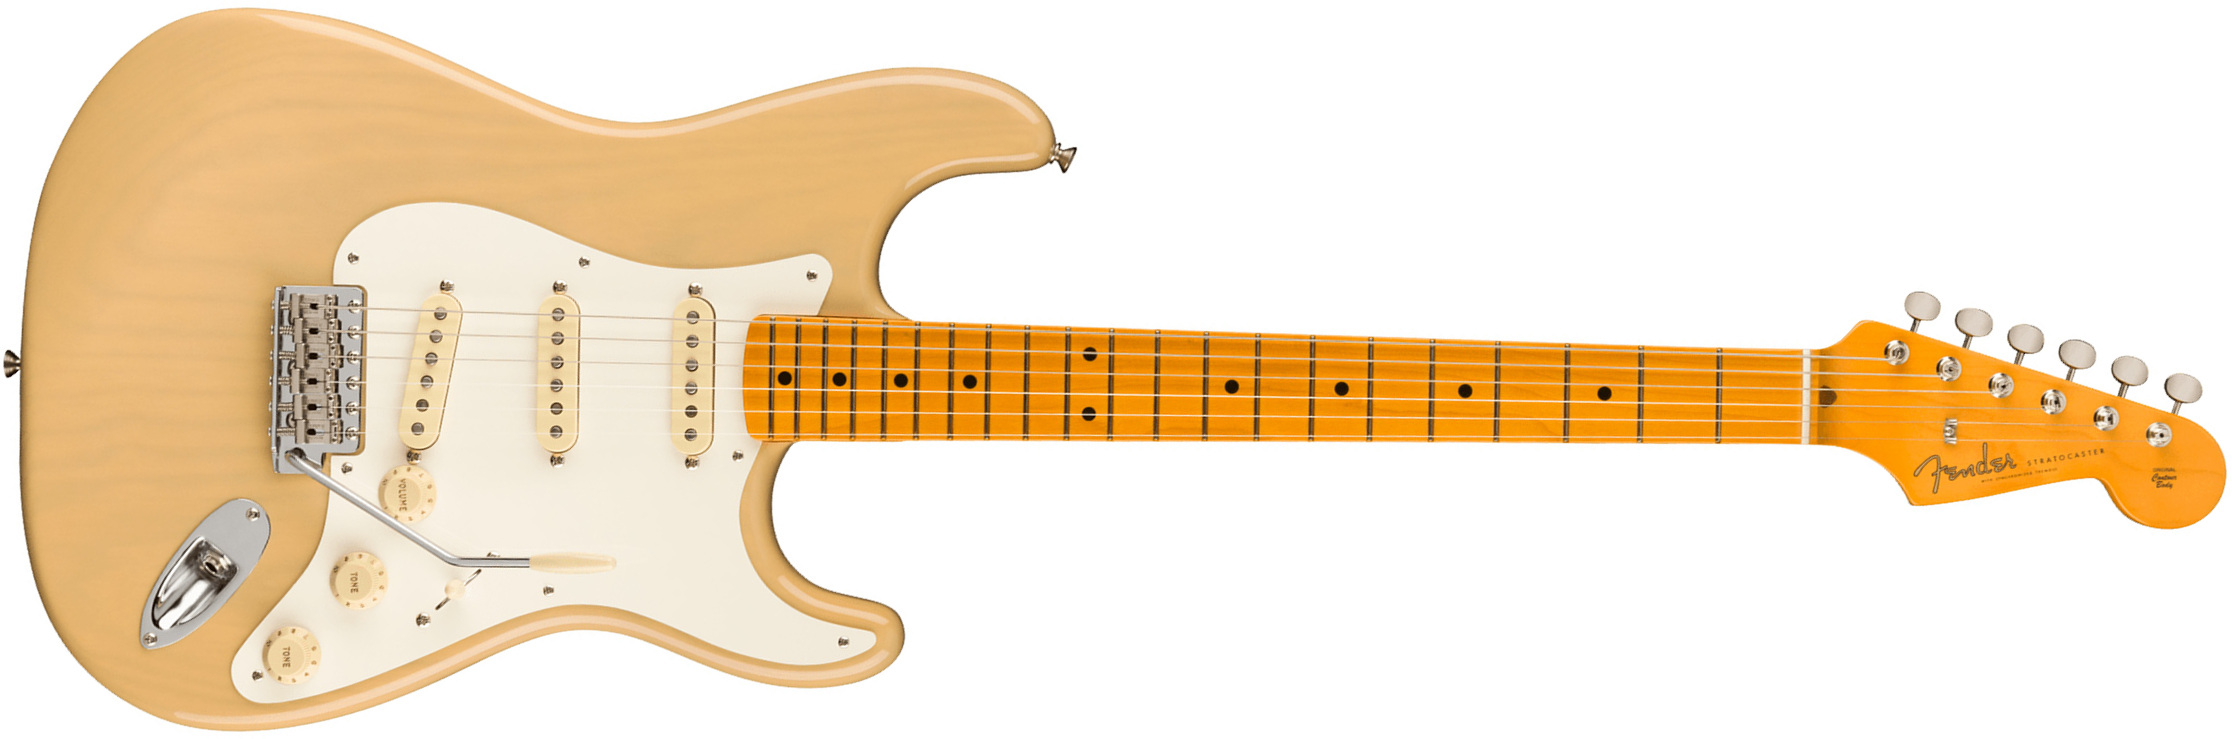 Fender Strat 1957 American Vintage Ii Usa 3s Trem Mn - Vintage Blonde - Guitarra eléctrica con forma de str. - Main picture